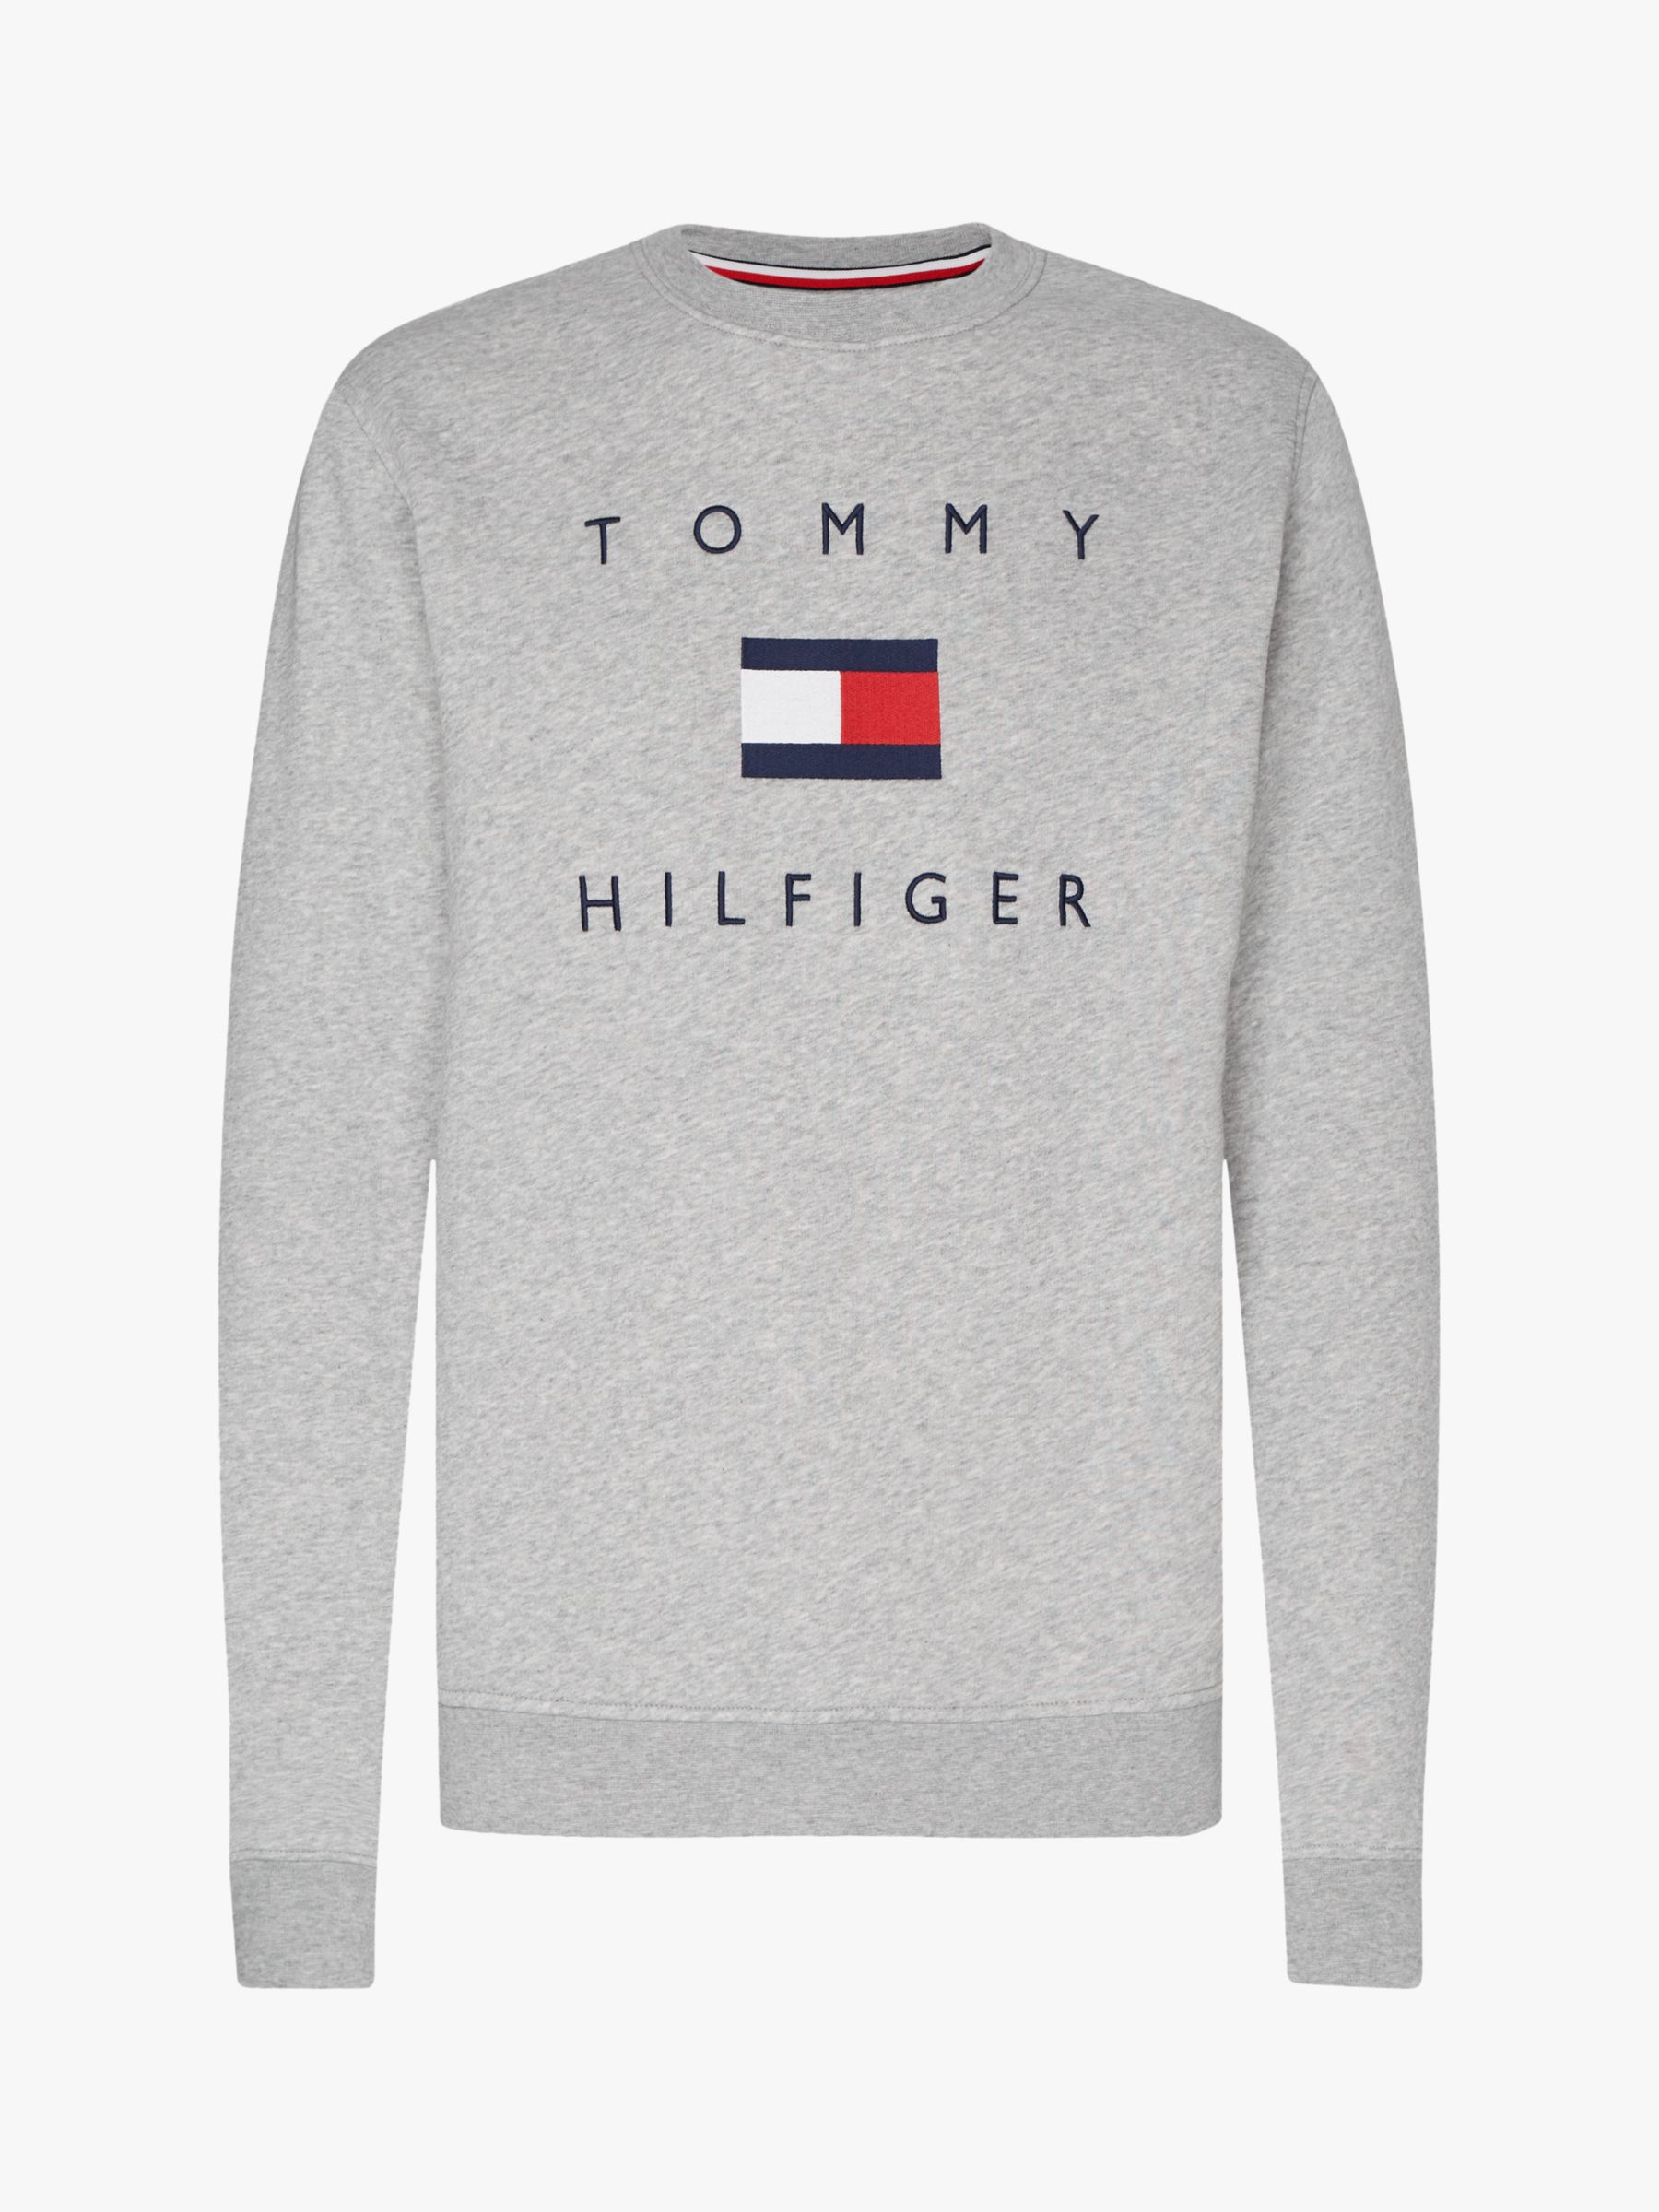 hilfiger logo sweatshirt